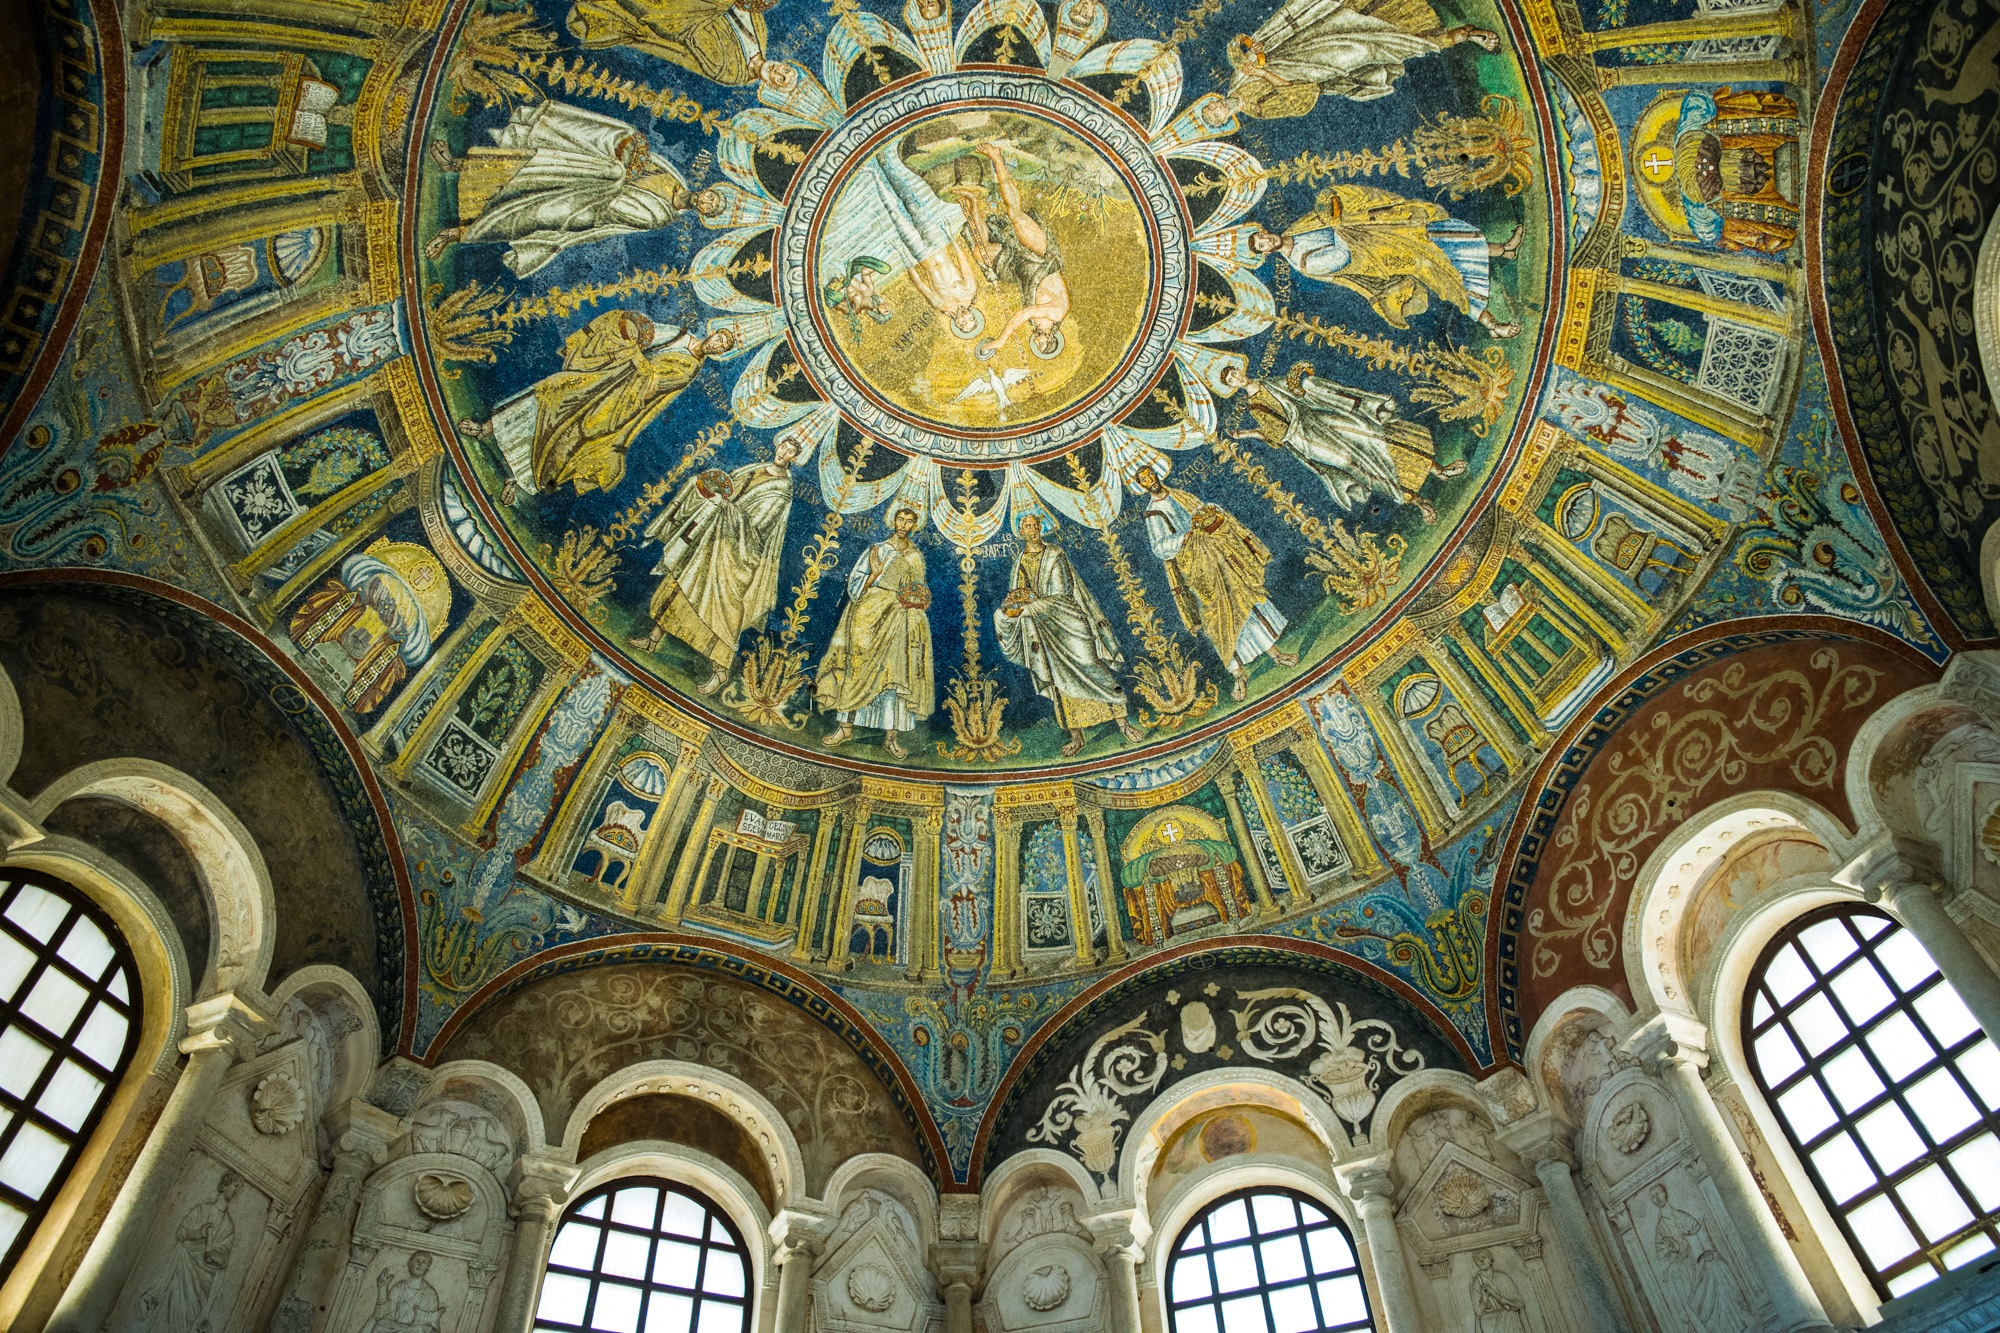 Ravenna Italia  Presentation, images and travel information about Ravenna